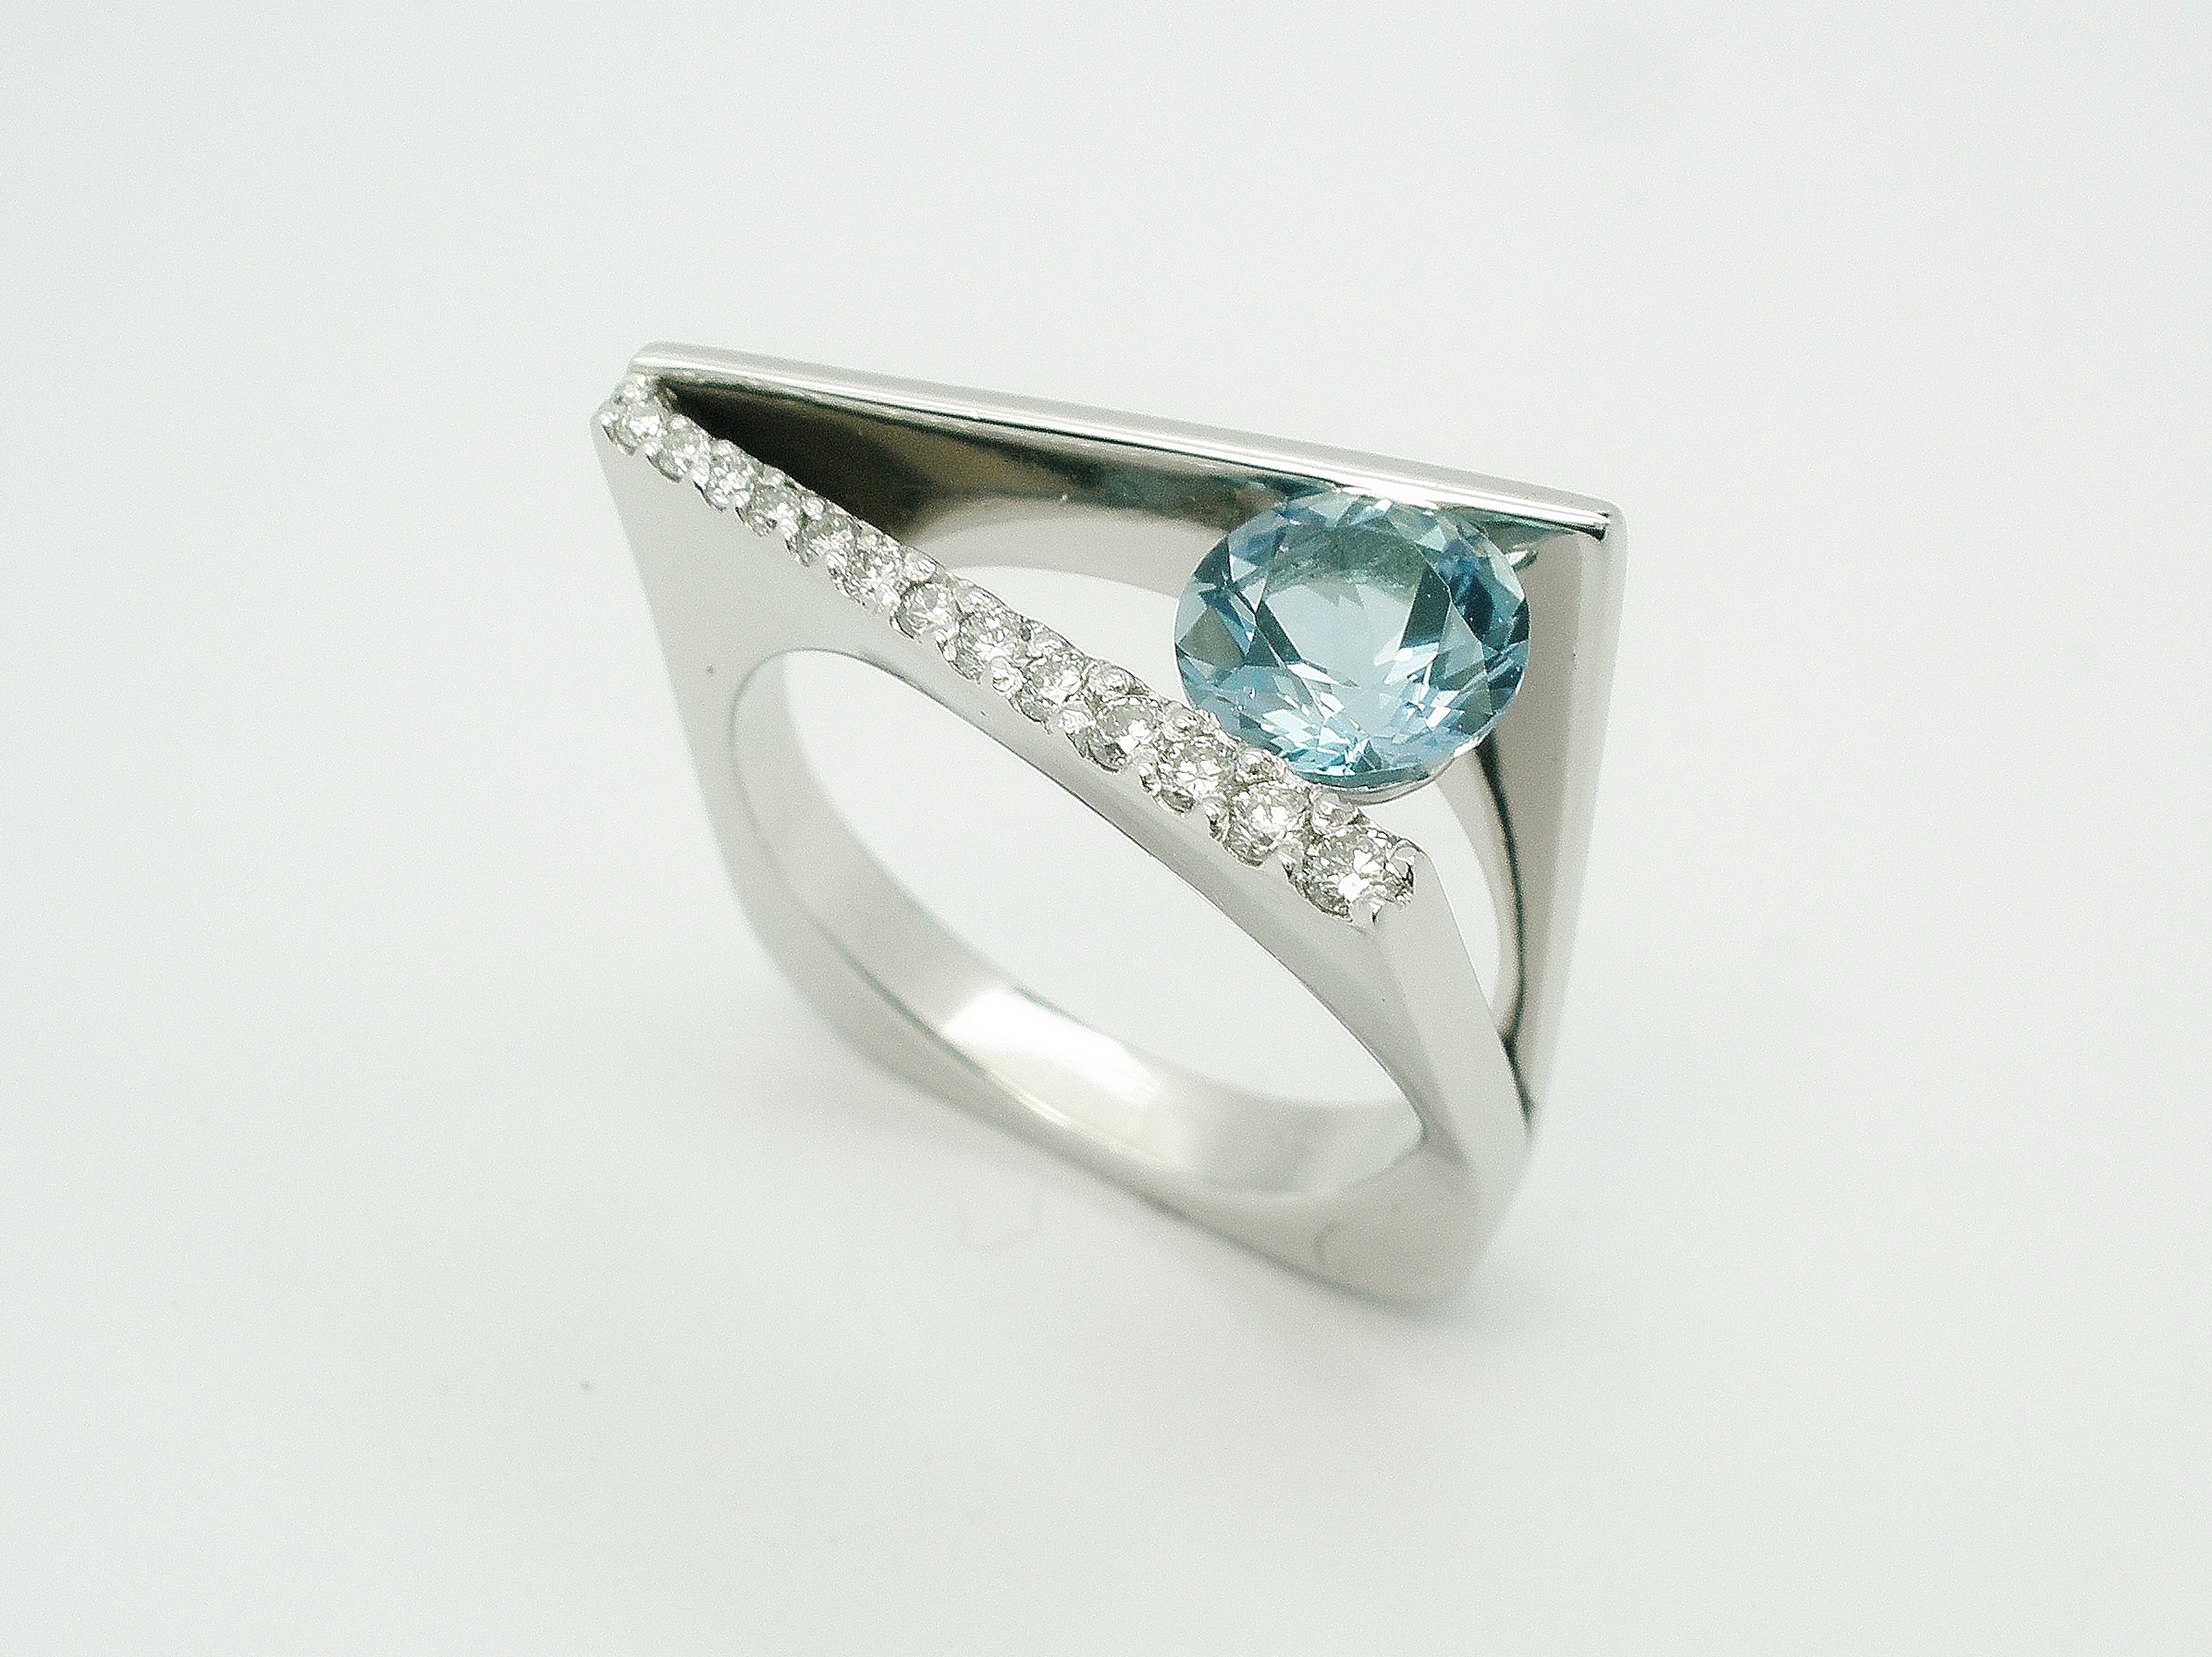 Round aquamarine & diamond 'Wedge' shaped, plateau, square sectioned ring mounted in palladium.